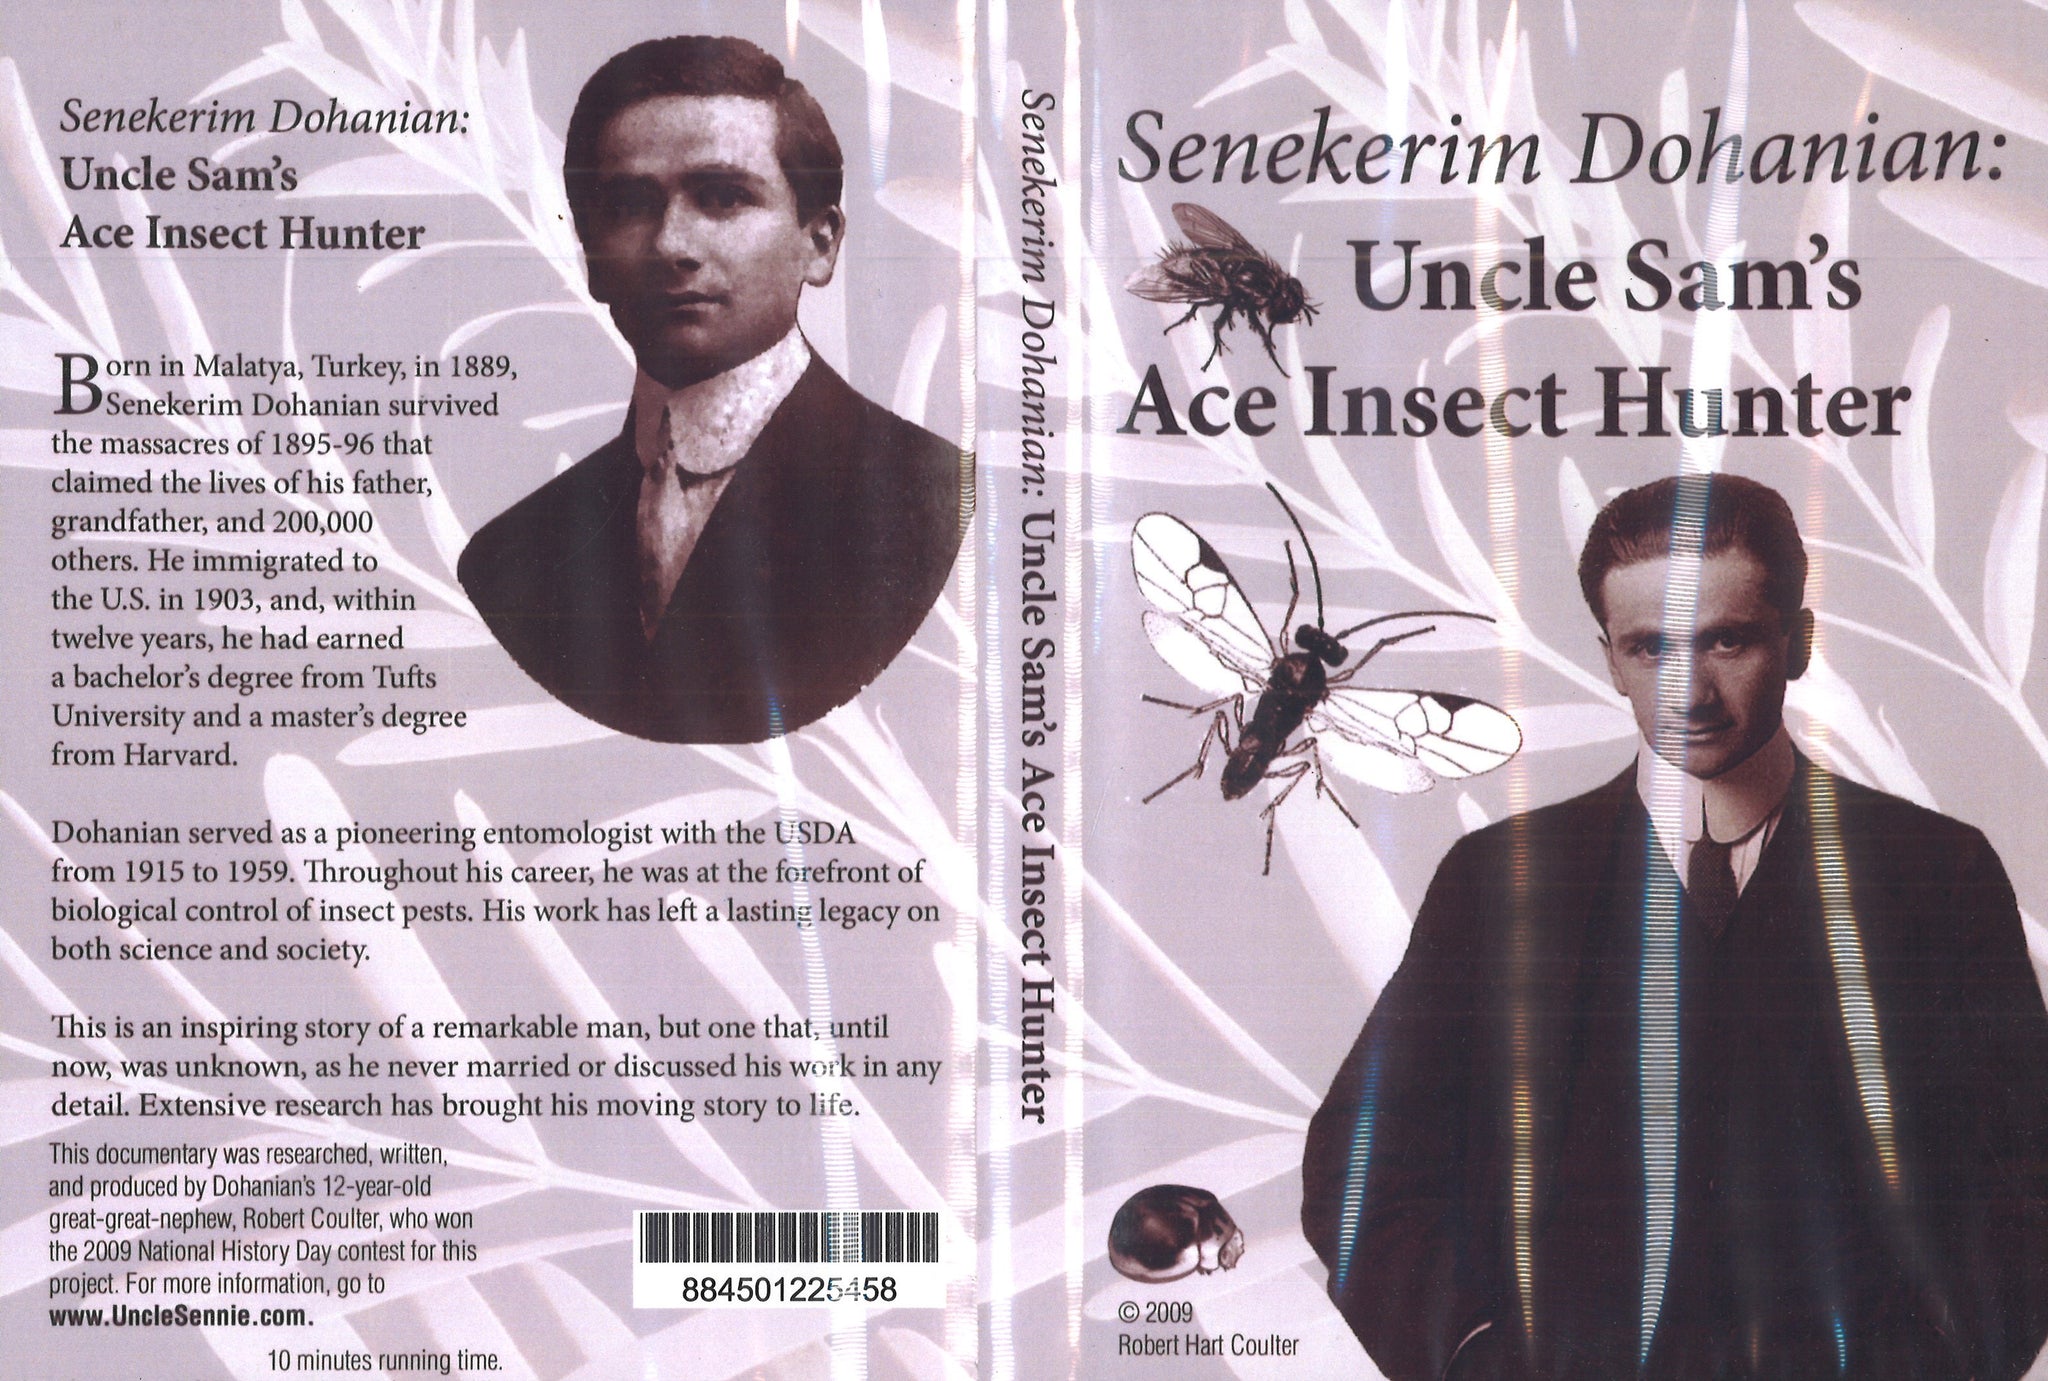 SENEKERIM DOHANIAN: Uncle Sam's Ace Insect Hunter